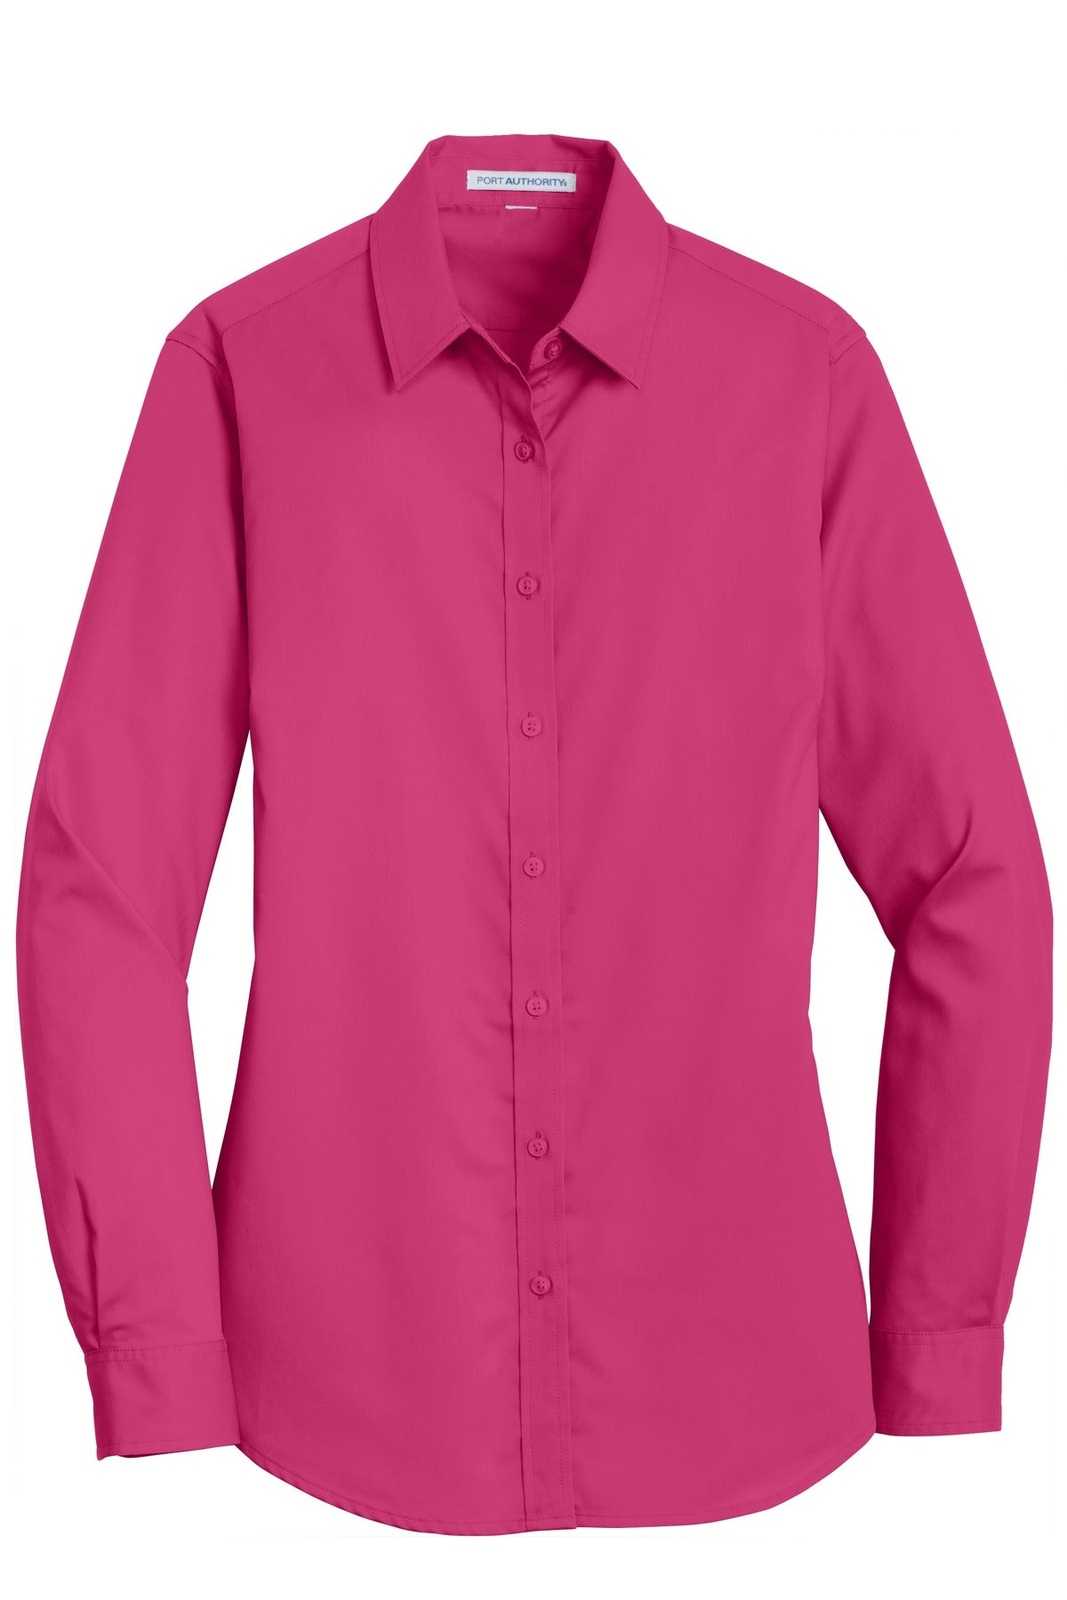 Port Authority L663 Ladies Superpro Twill Shirt - Pink Azalea - HIT a Double - 5